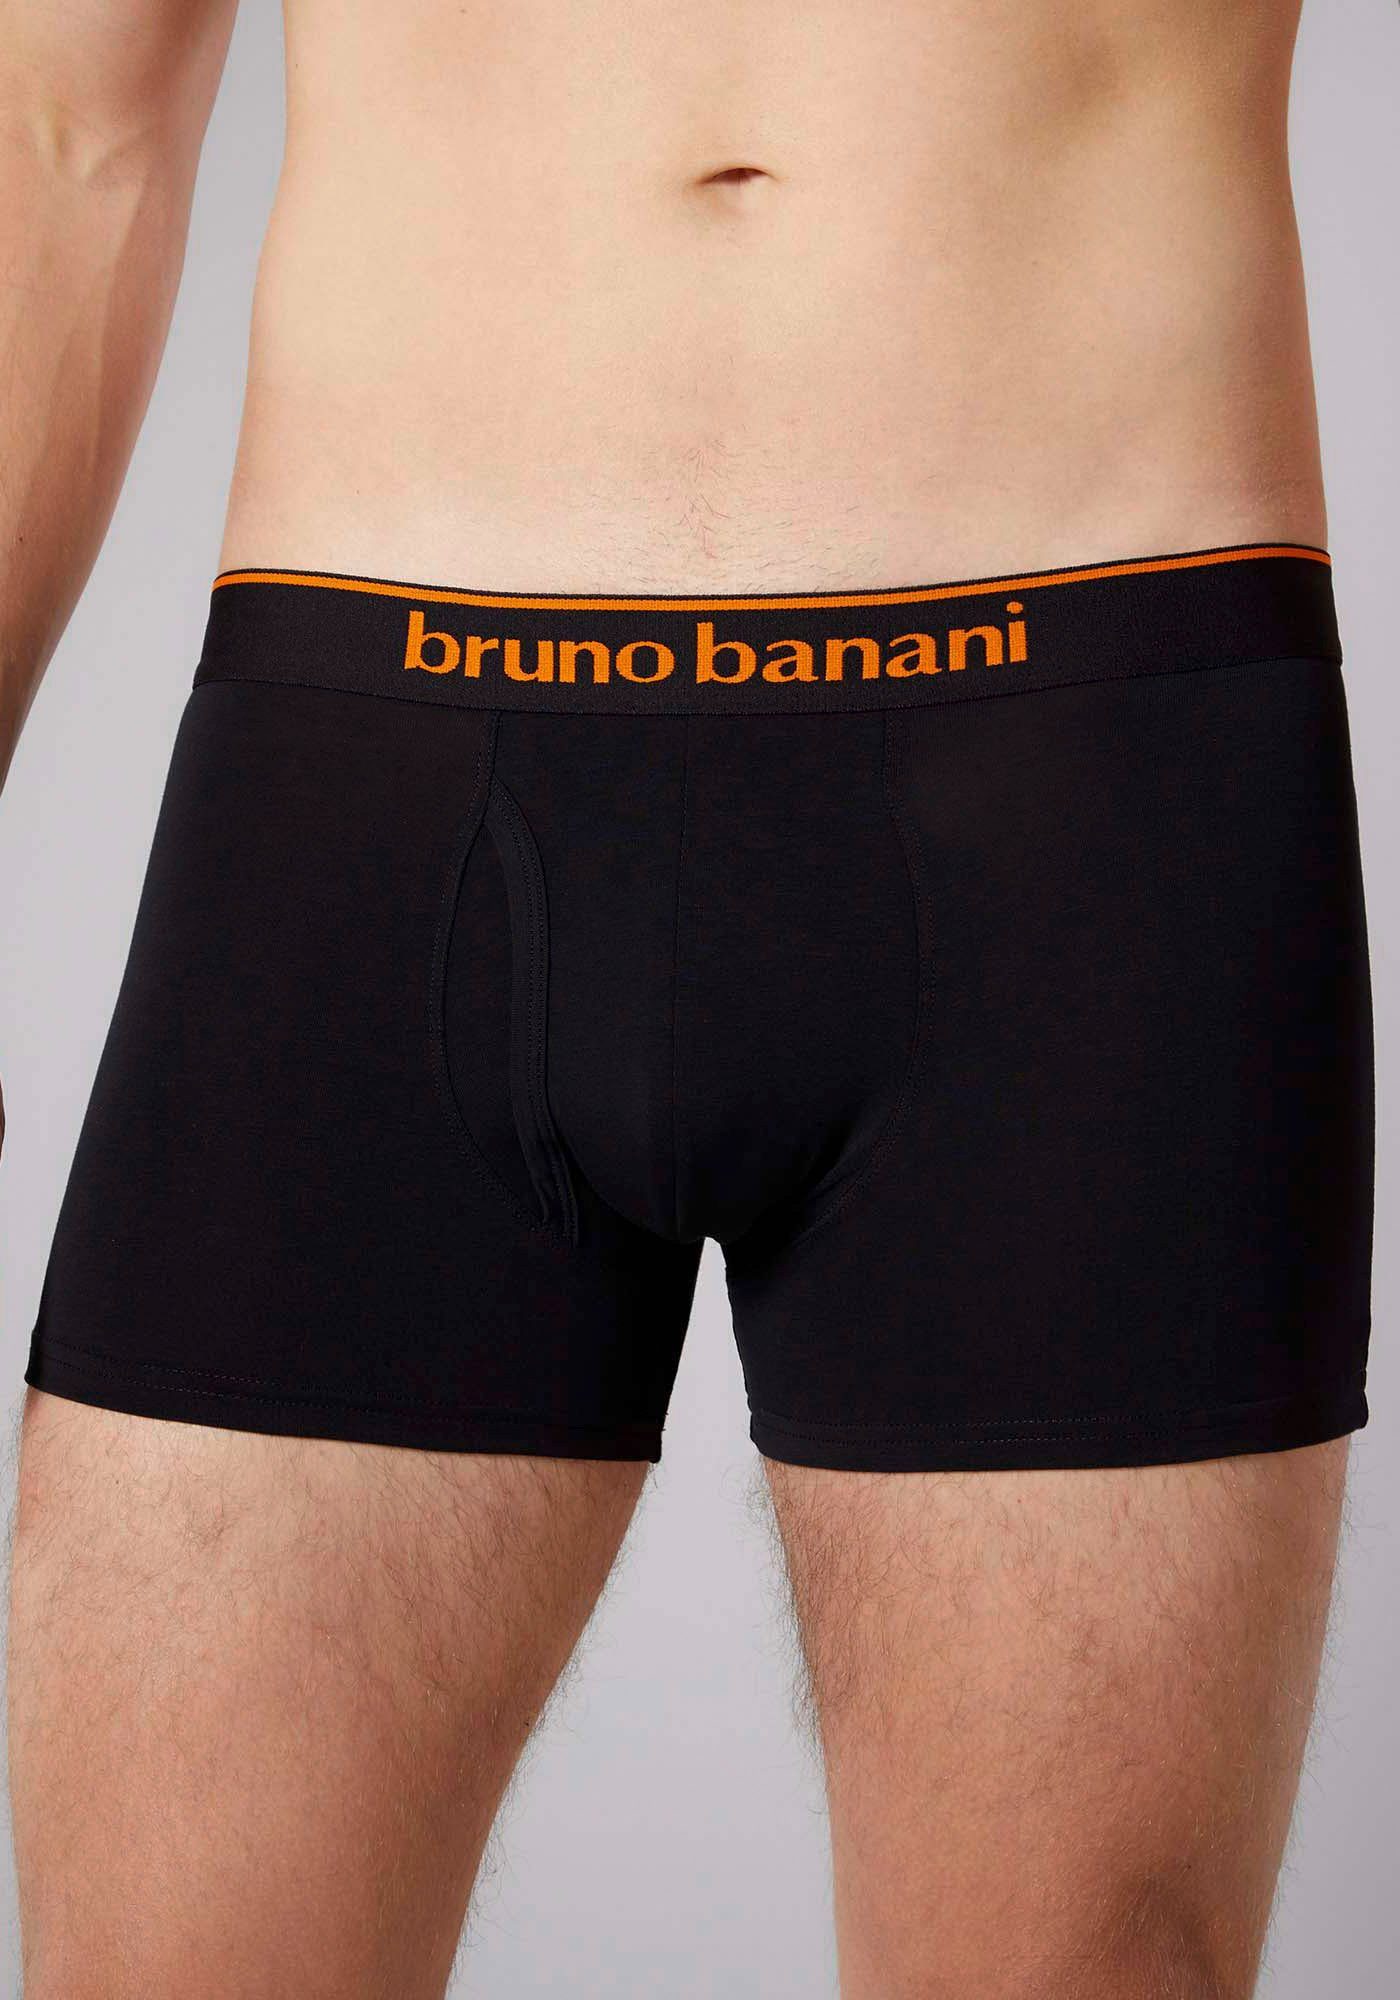 Quick Bruno 2Pack Banani Access Kontrastfarbene Short 2-St) Details Boxershorts (Packung, schwarz